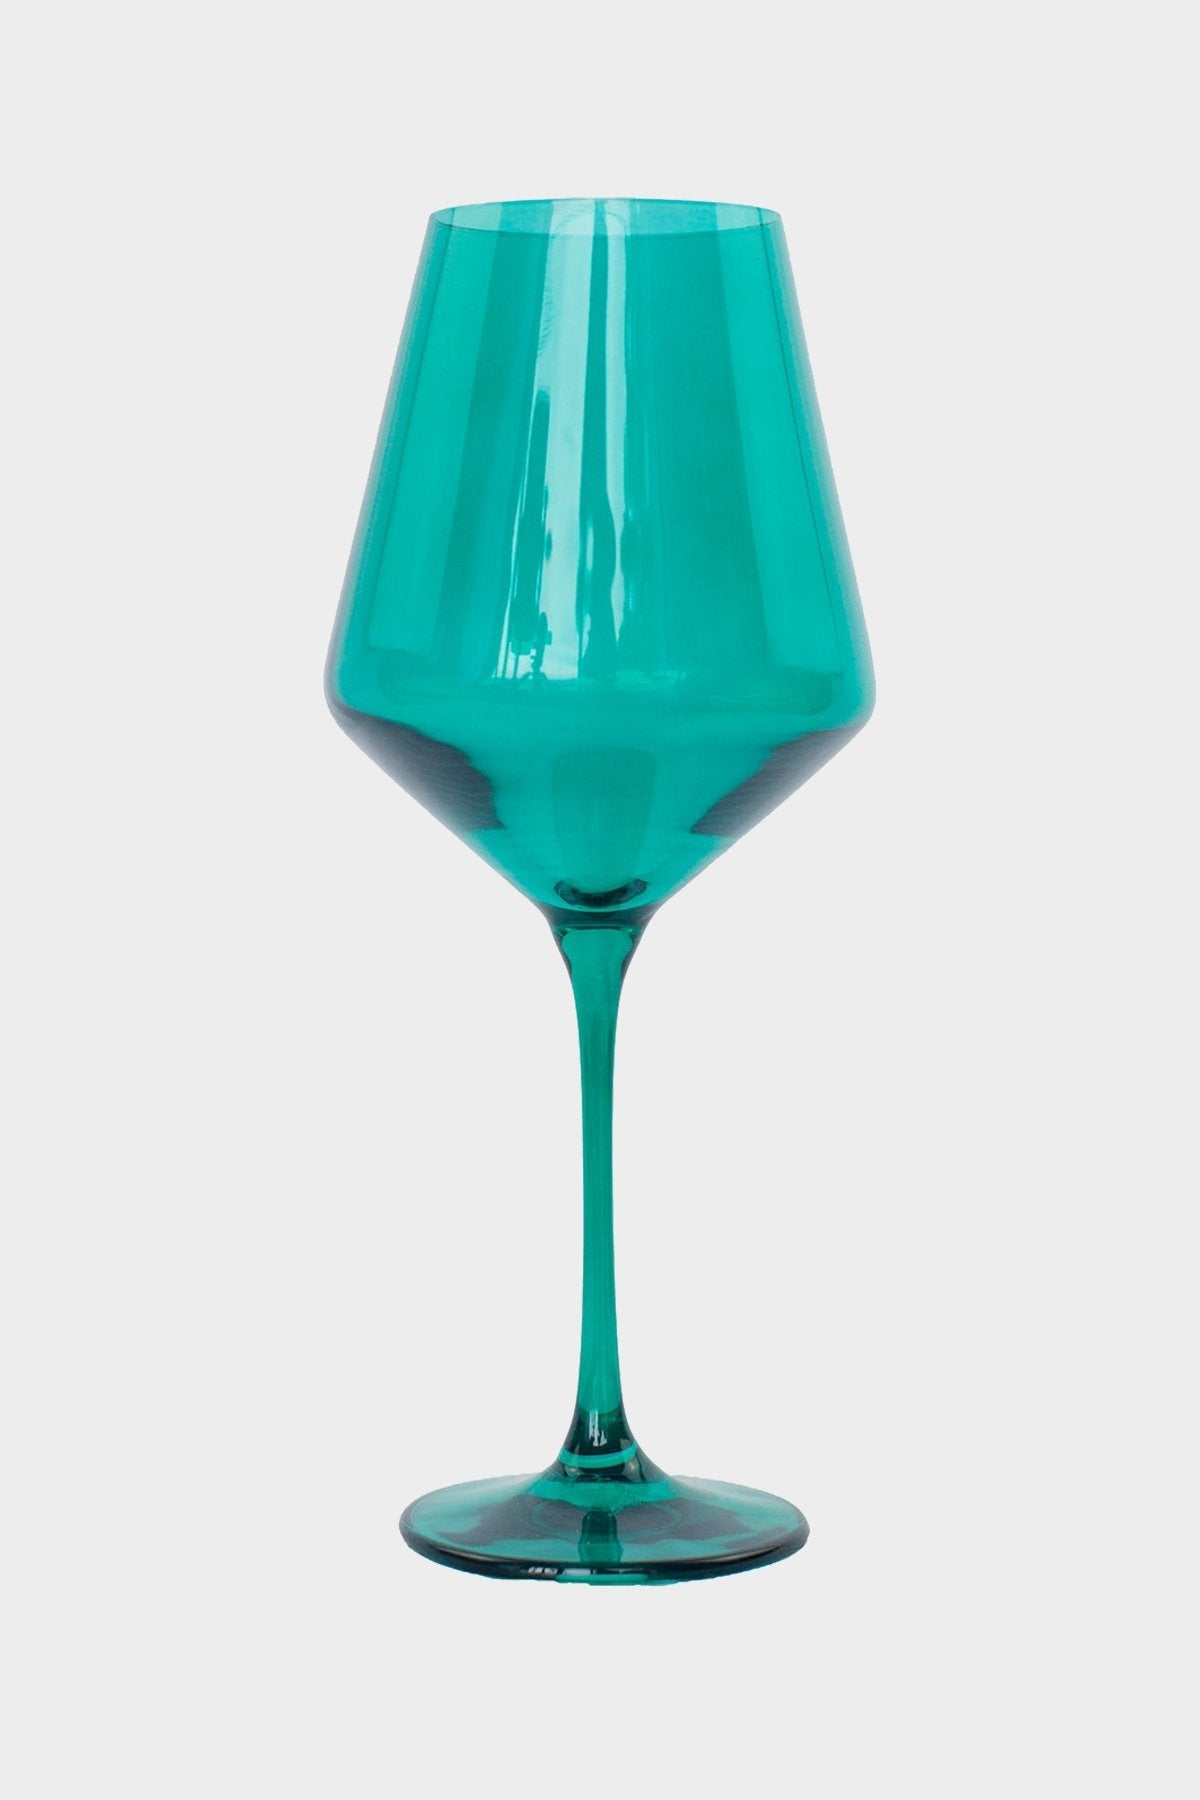 Wine Stemware Glass in Emerald Green - Set of 6 - shop-olivia.com